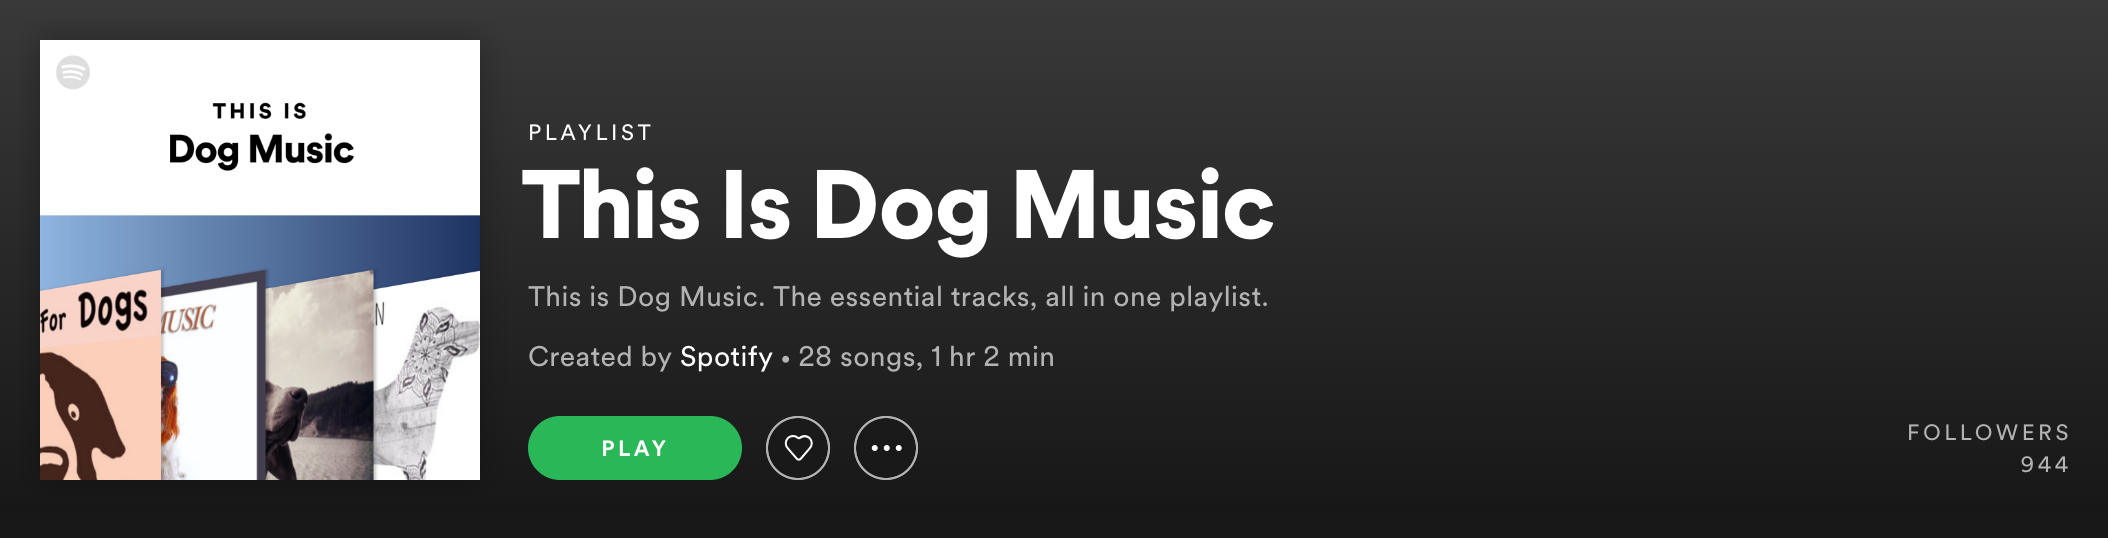 Dog Music playlist